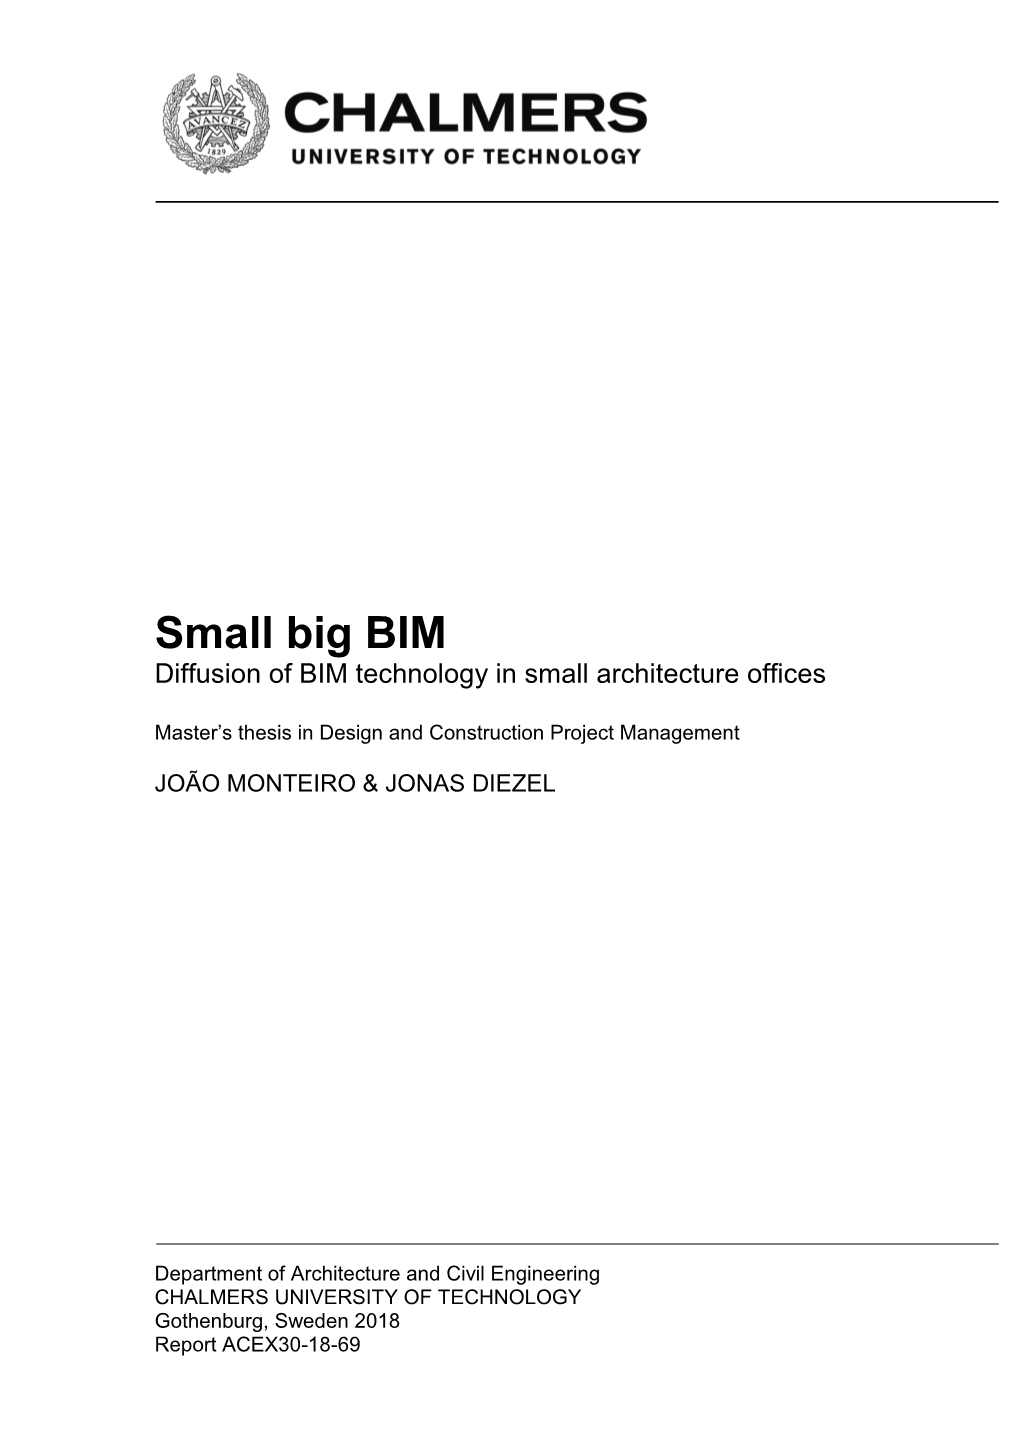 Small Big BIM Diffusion of BIM Technology in Small Architecture Offices